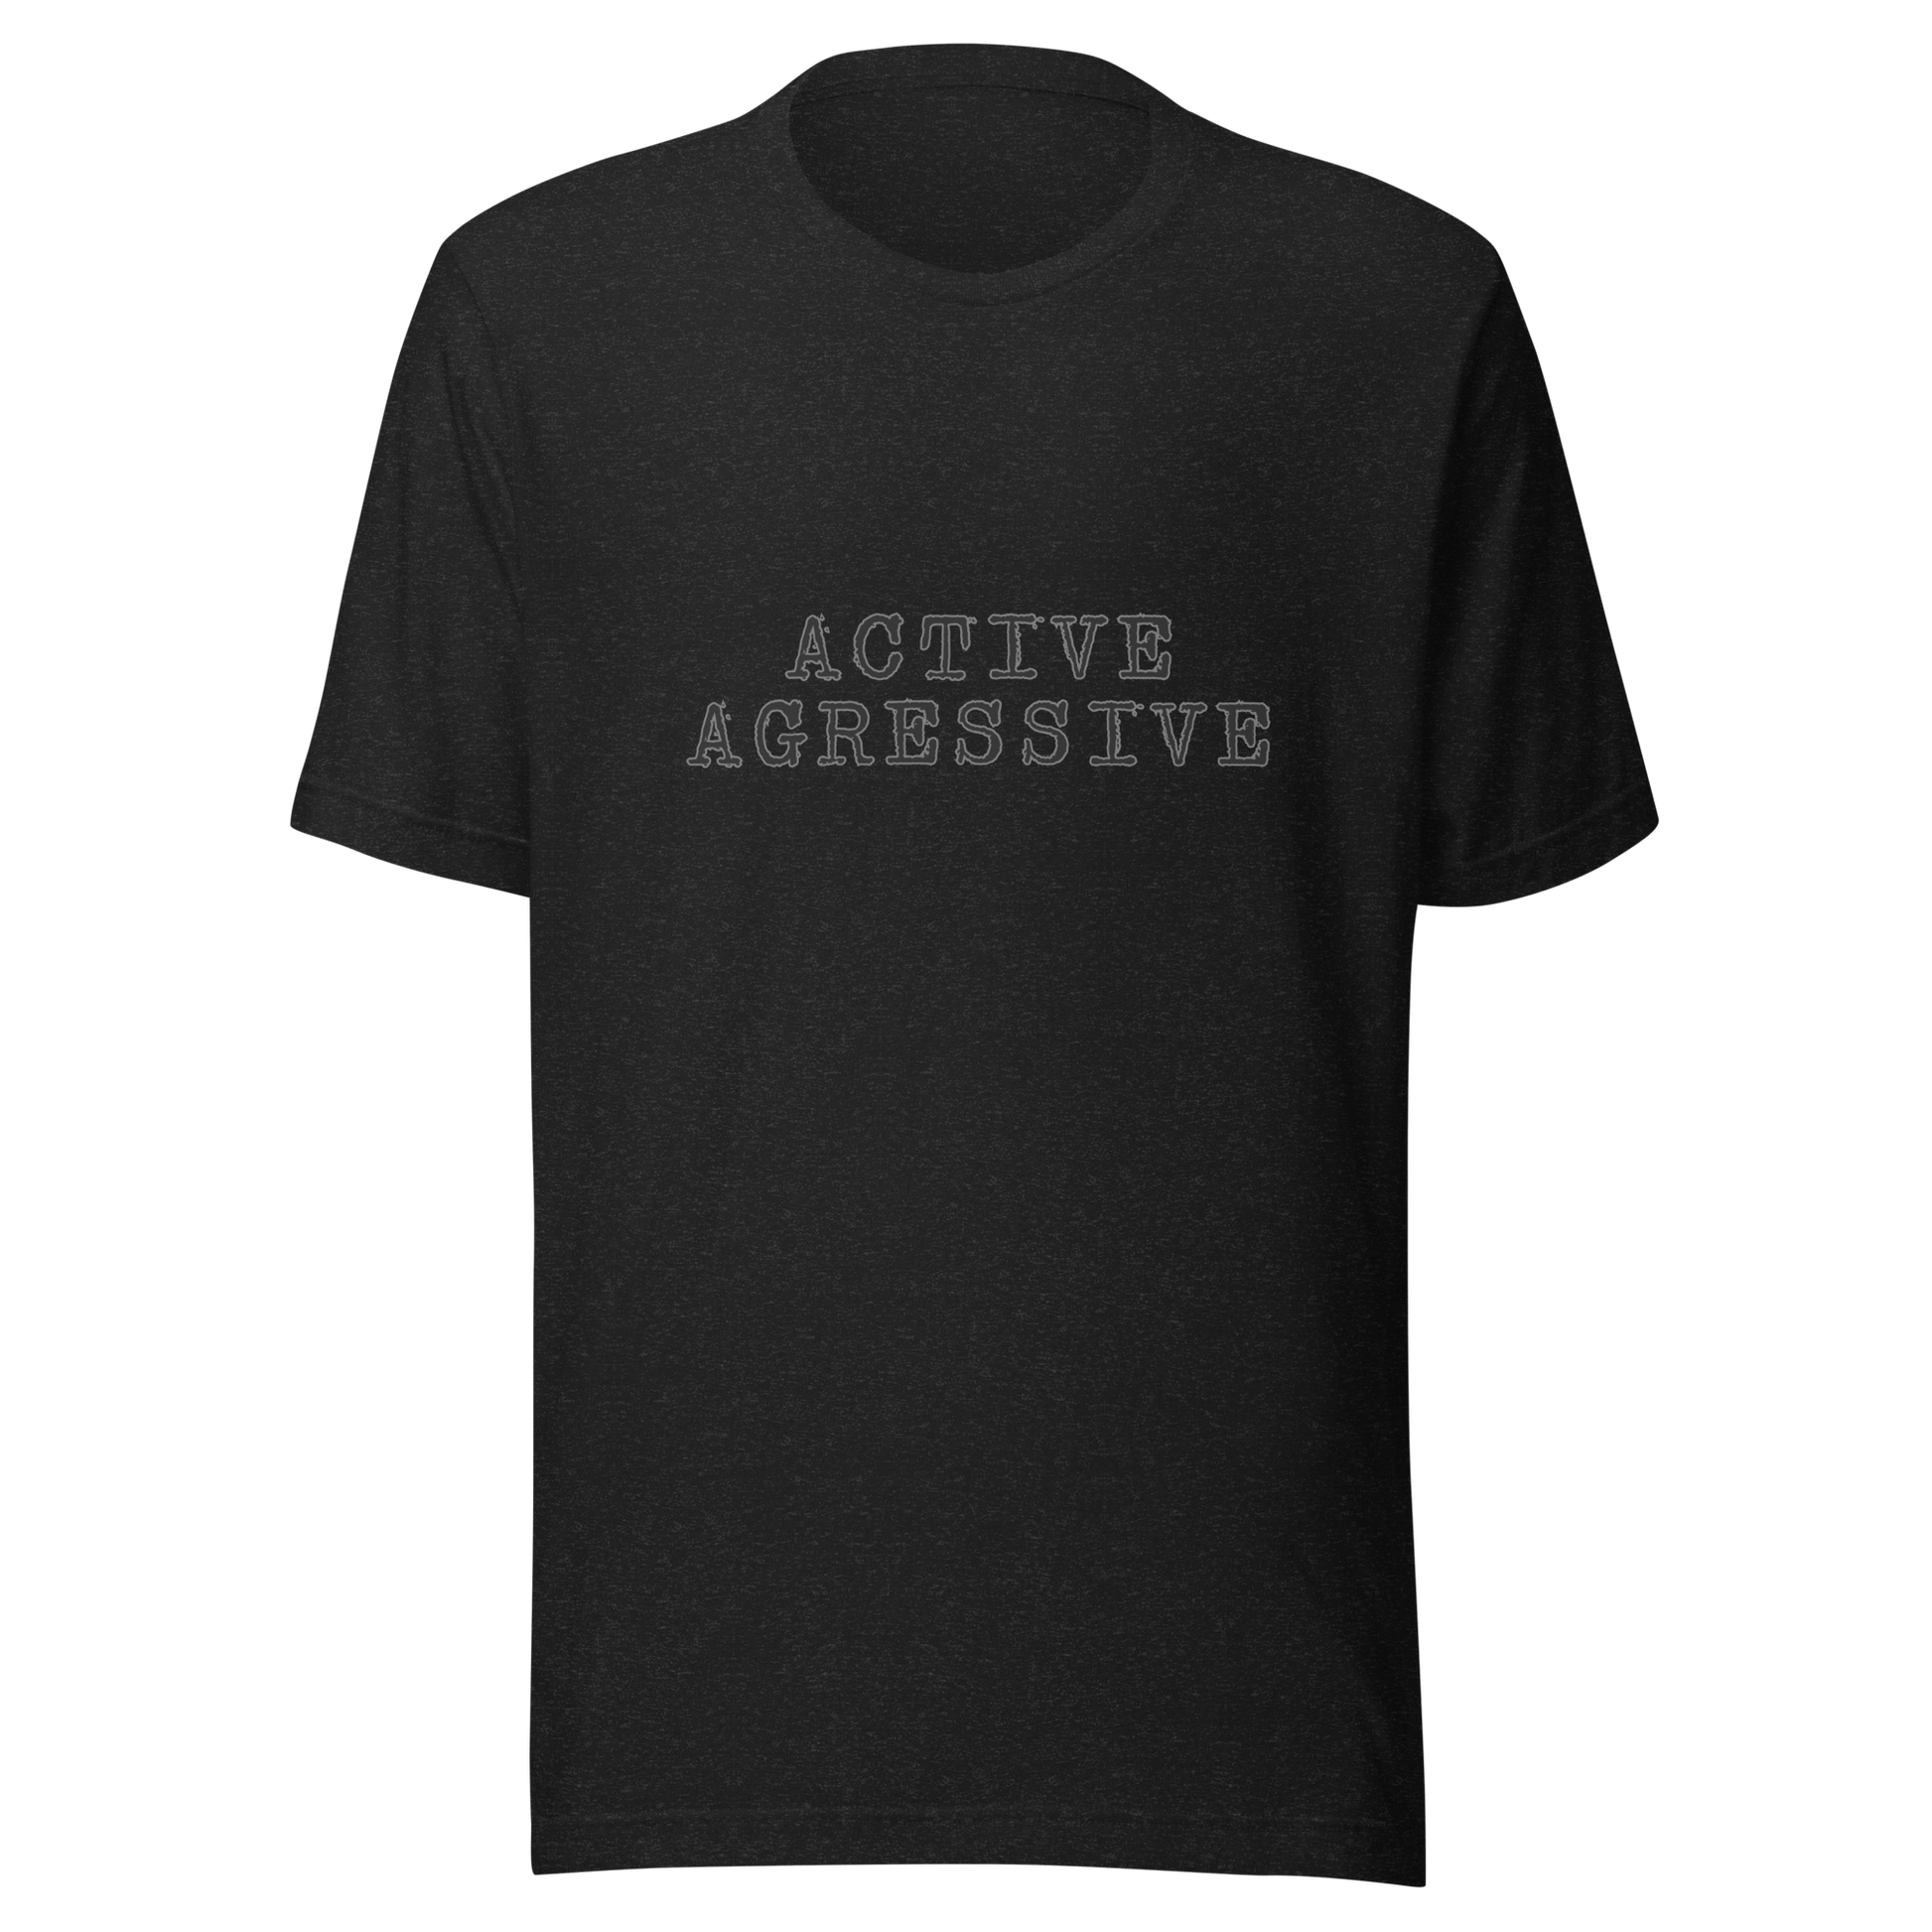 active aggressive t-shirt in black - gaslit apparel